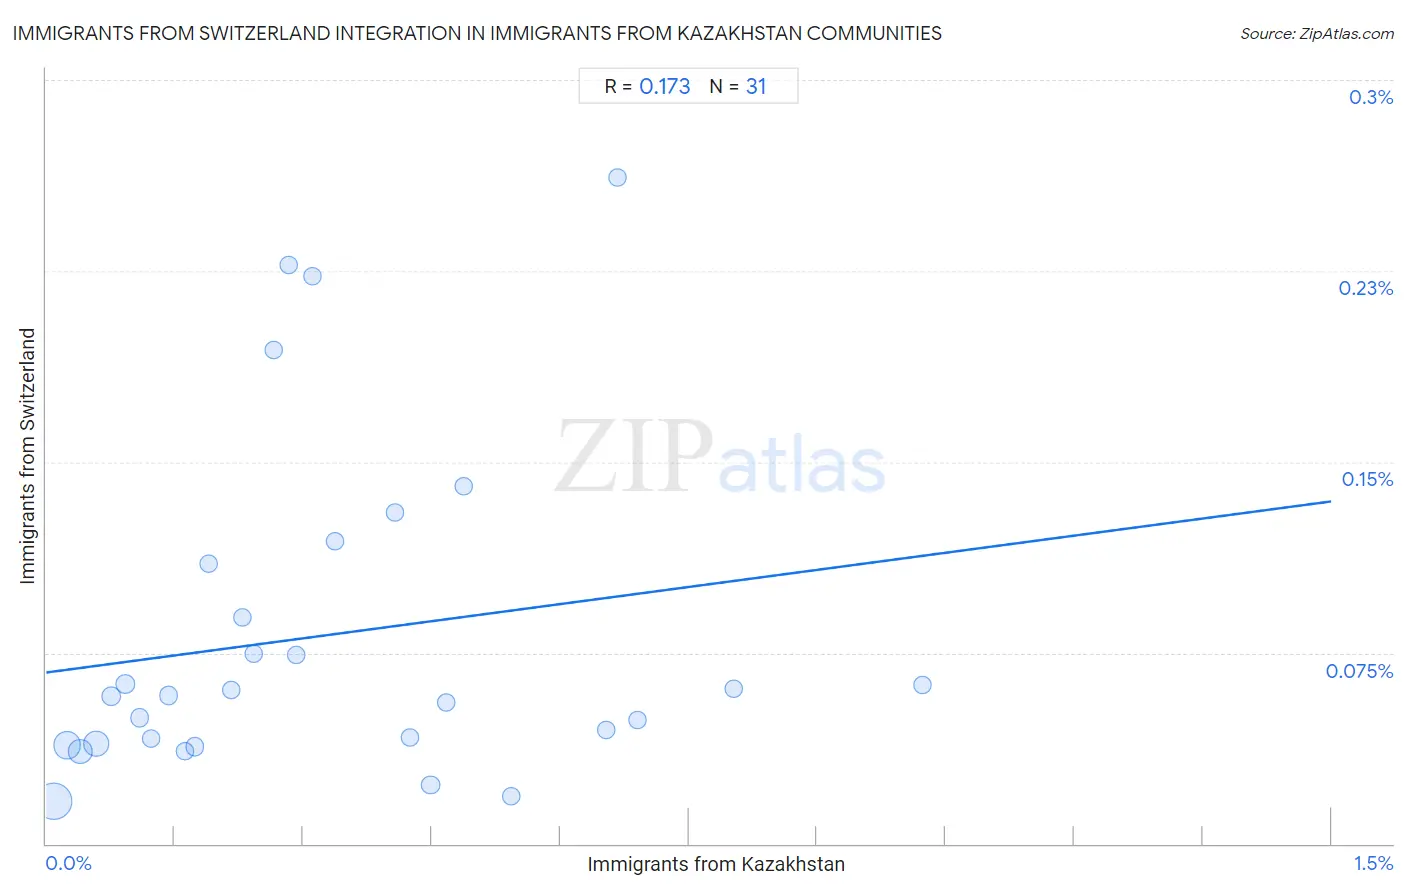 Immigrants from Kazakhstan Integration in Immigrants from Switzerland Communities